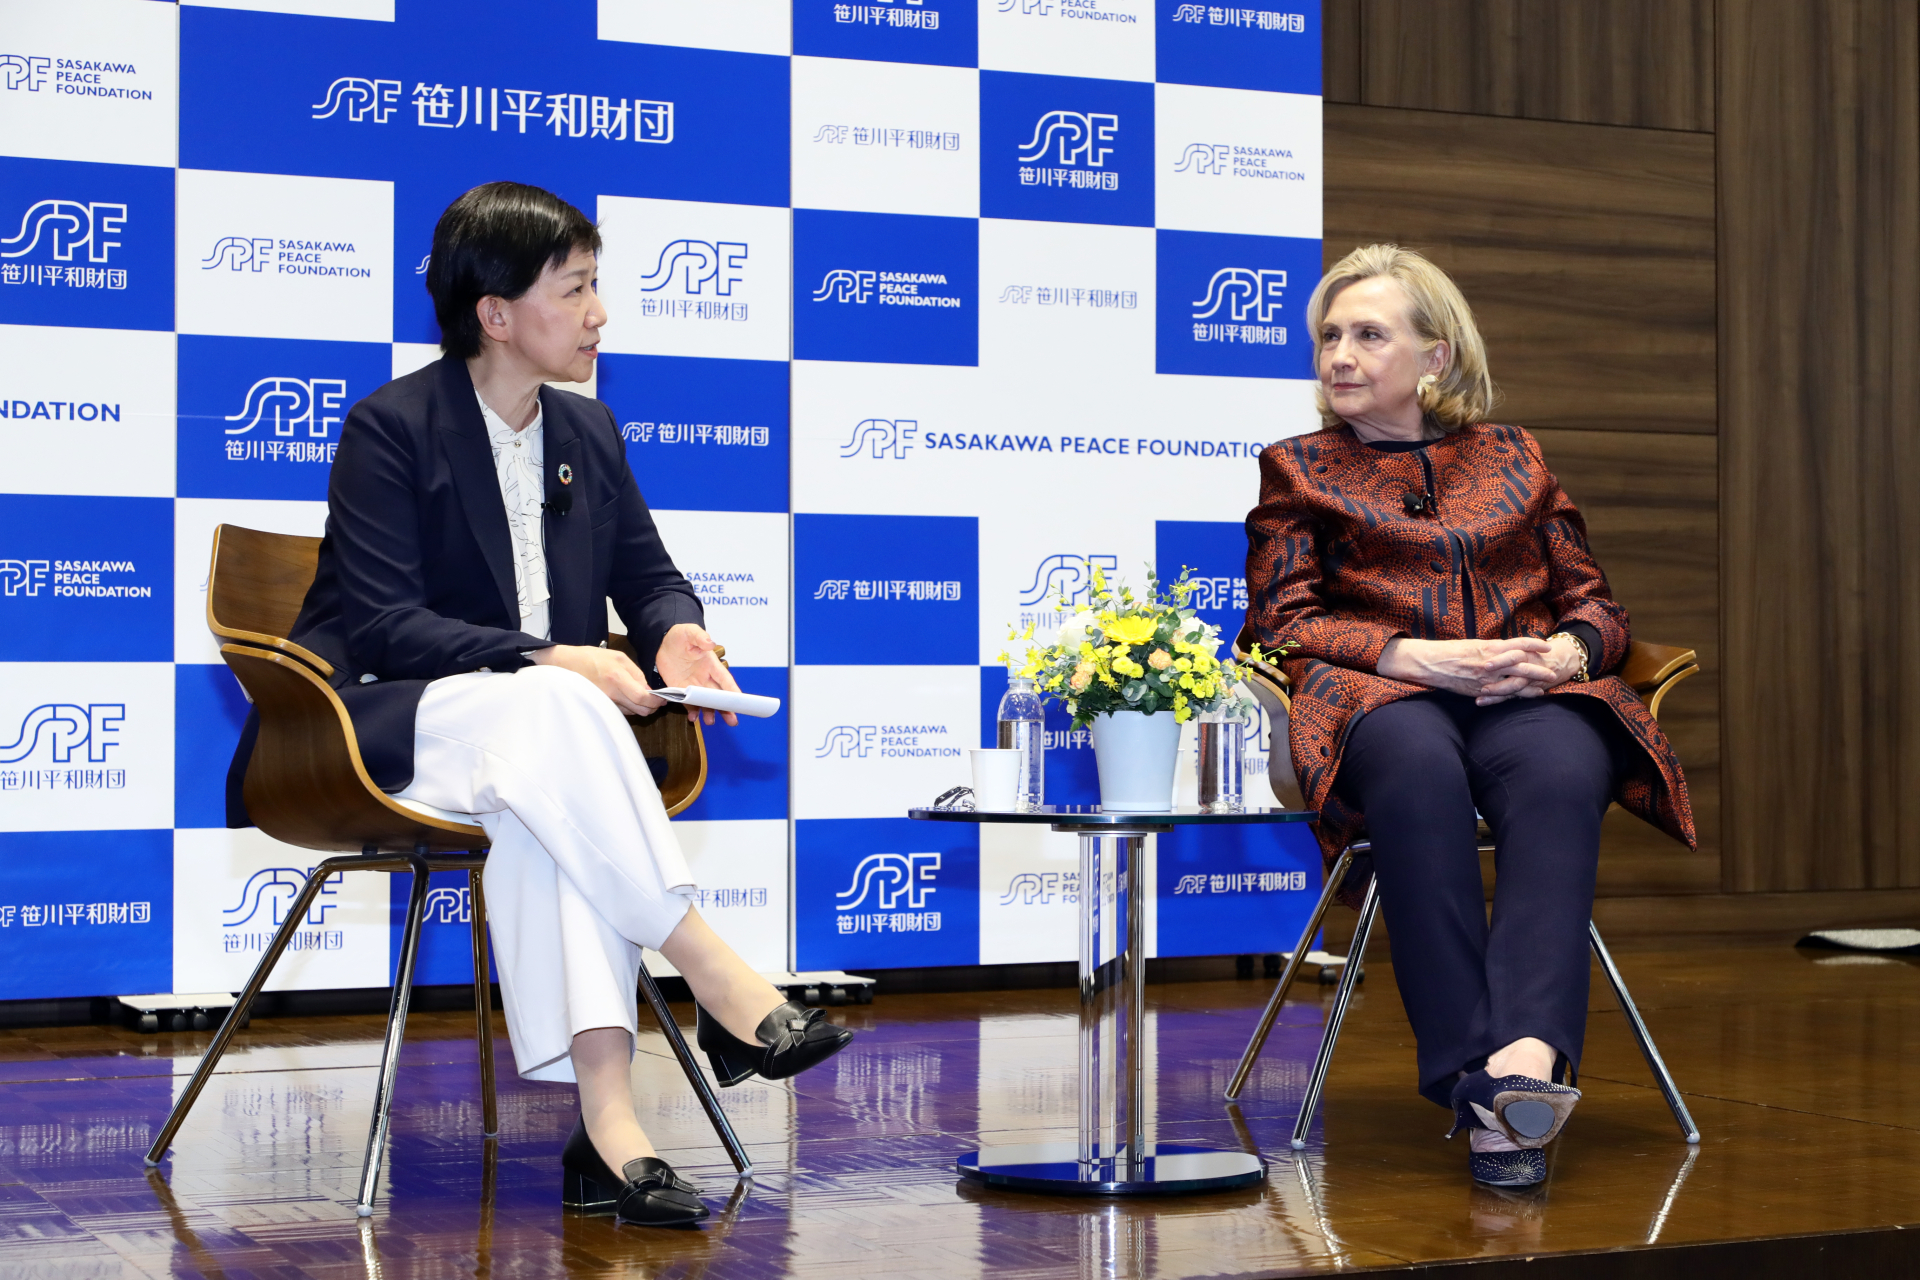 Secretary Clinton and Ms. Nakamitsu in conversation